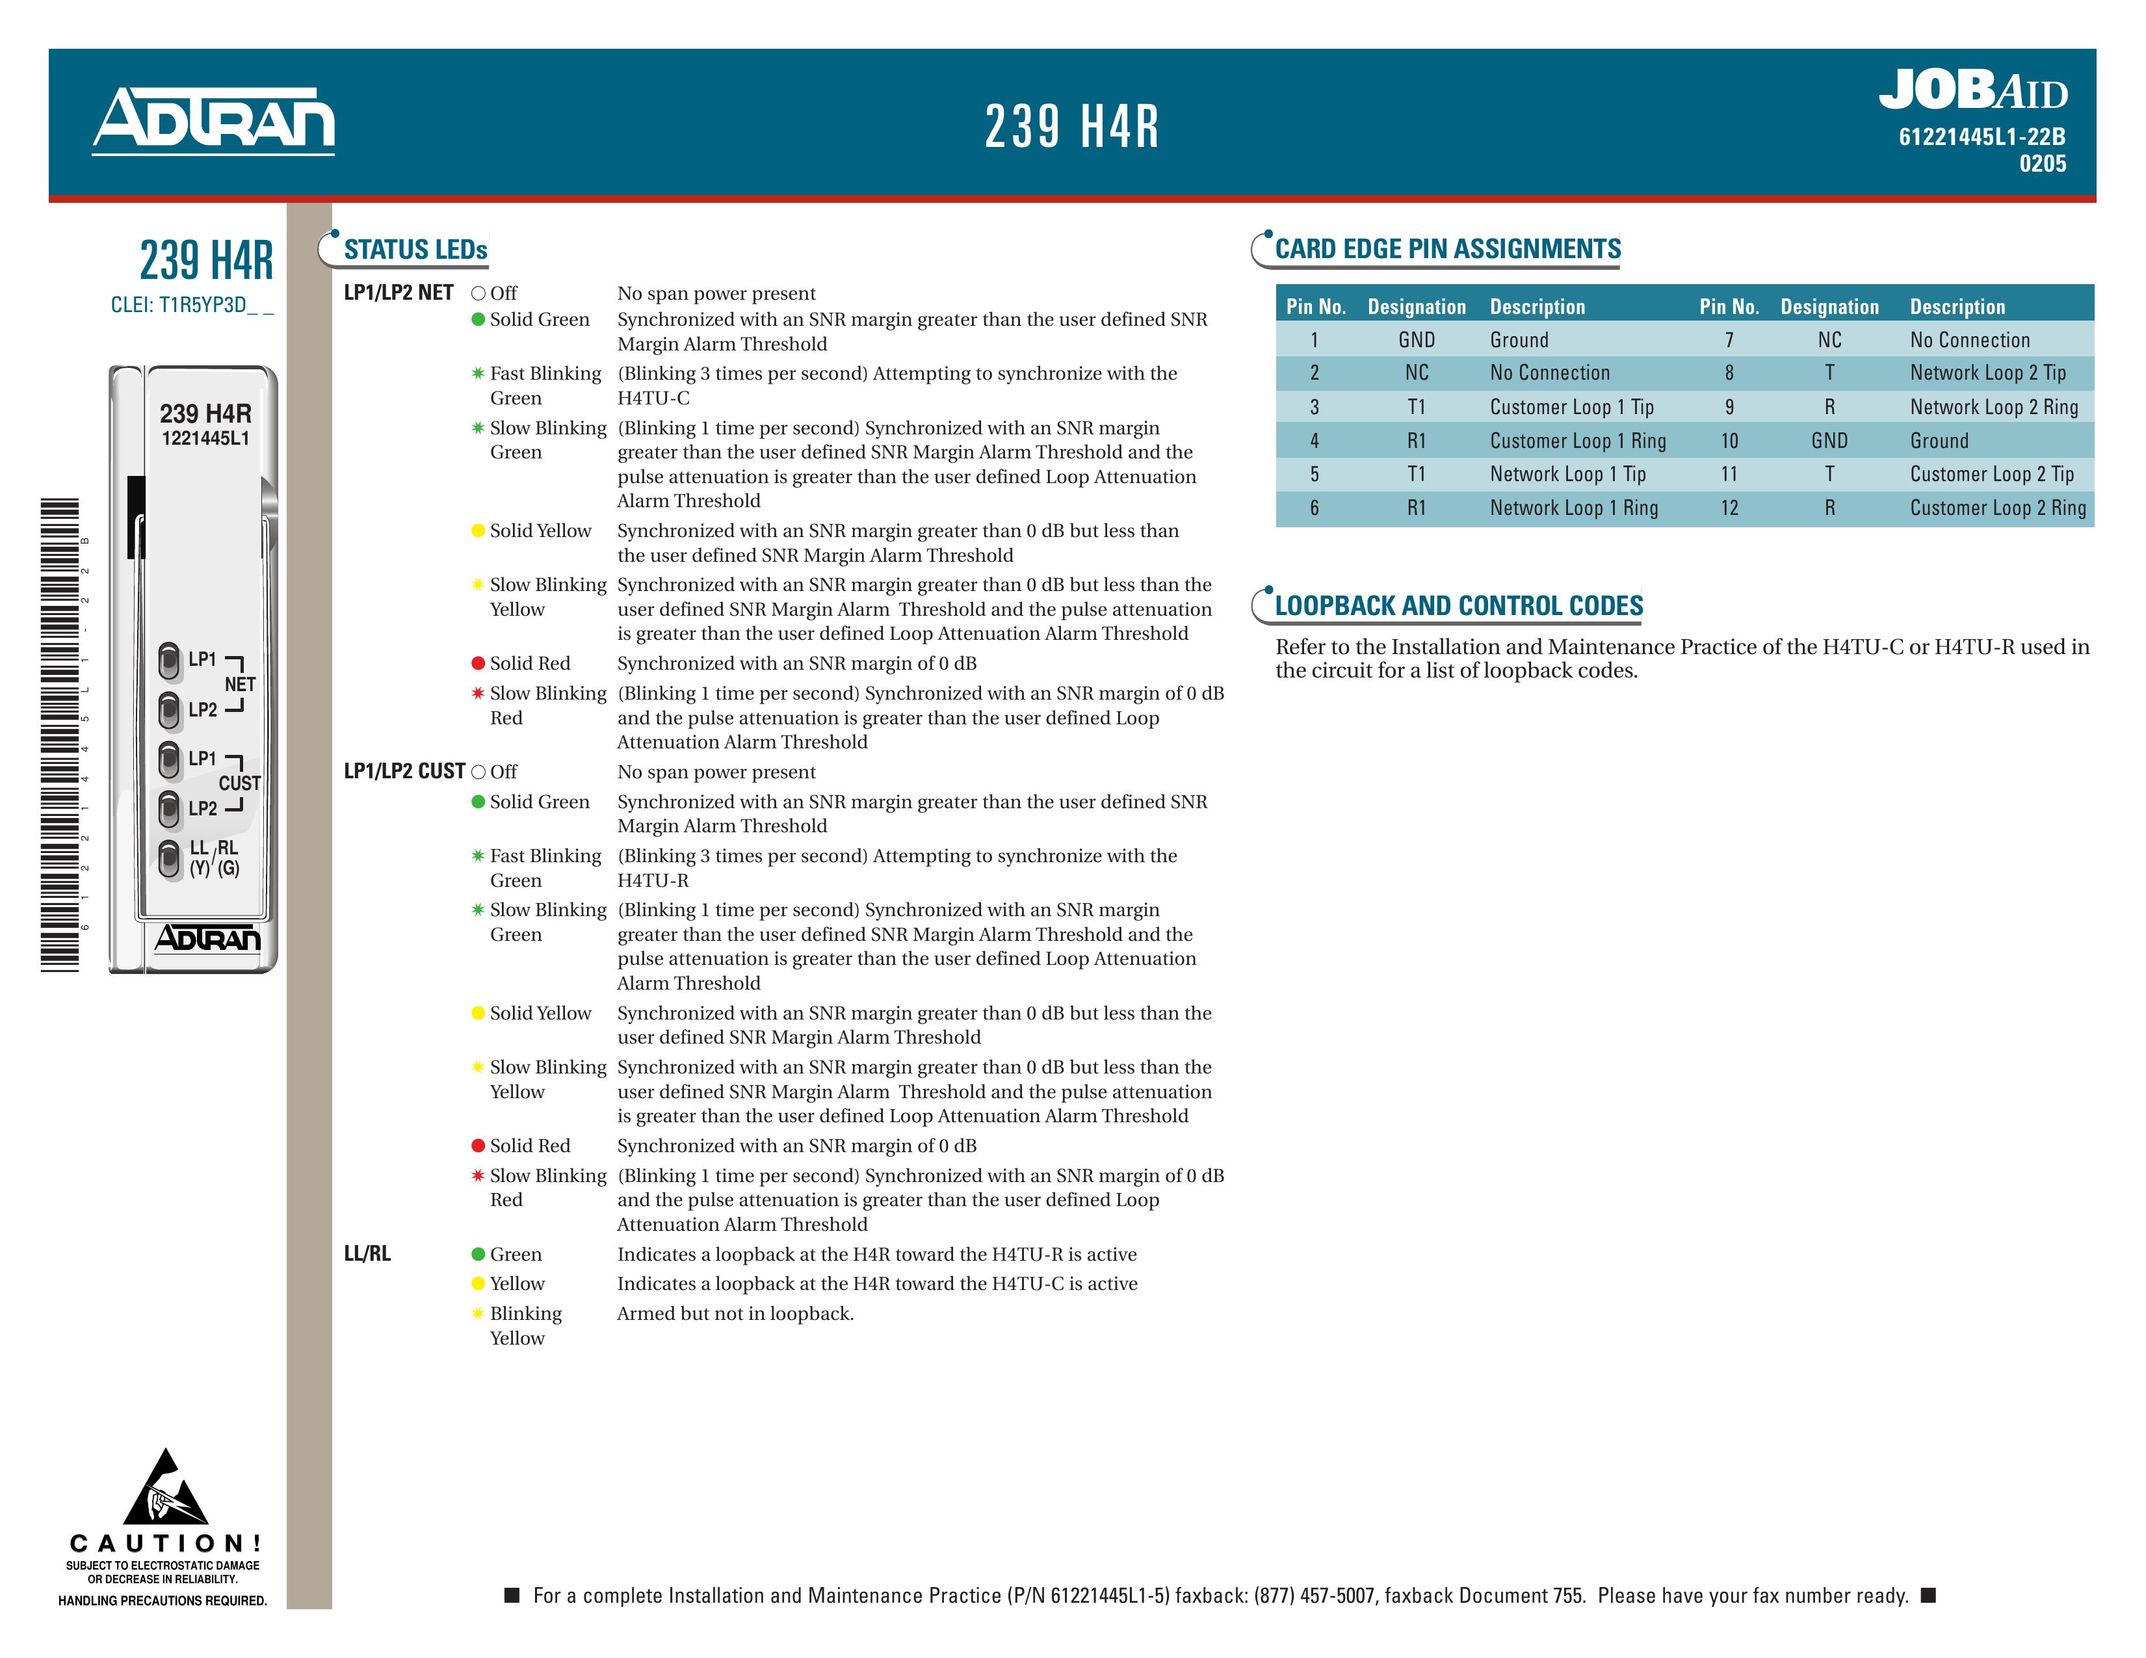 ADTRAN 239 H4R Network Card User Manual